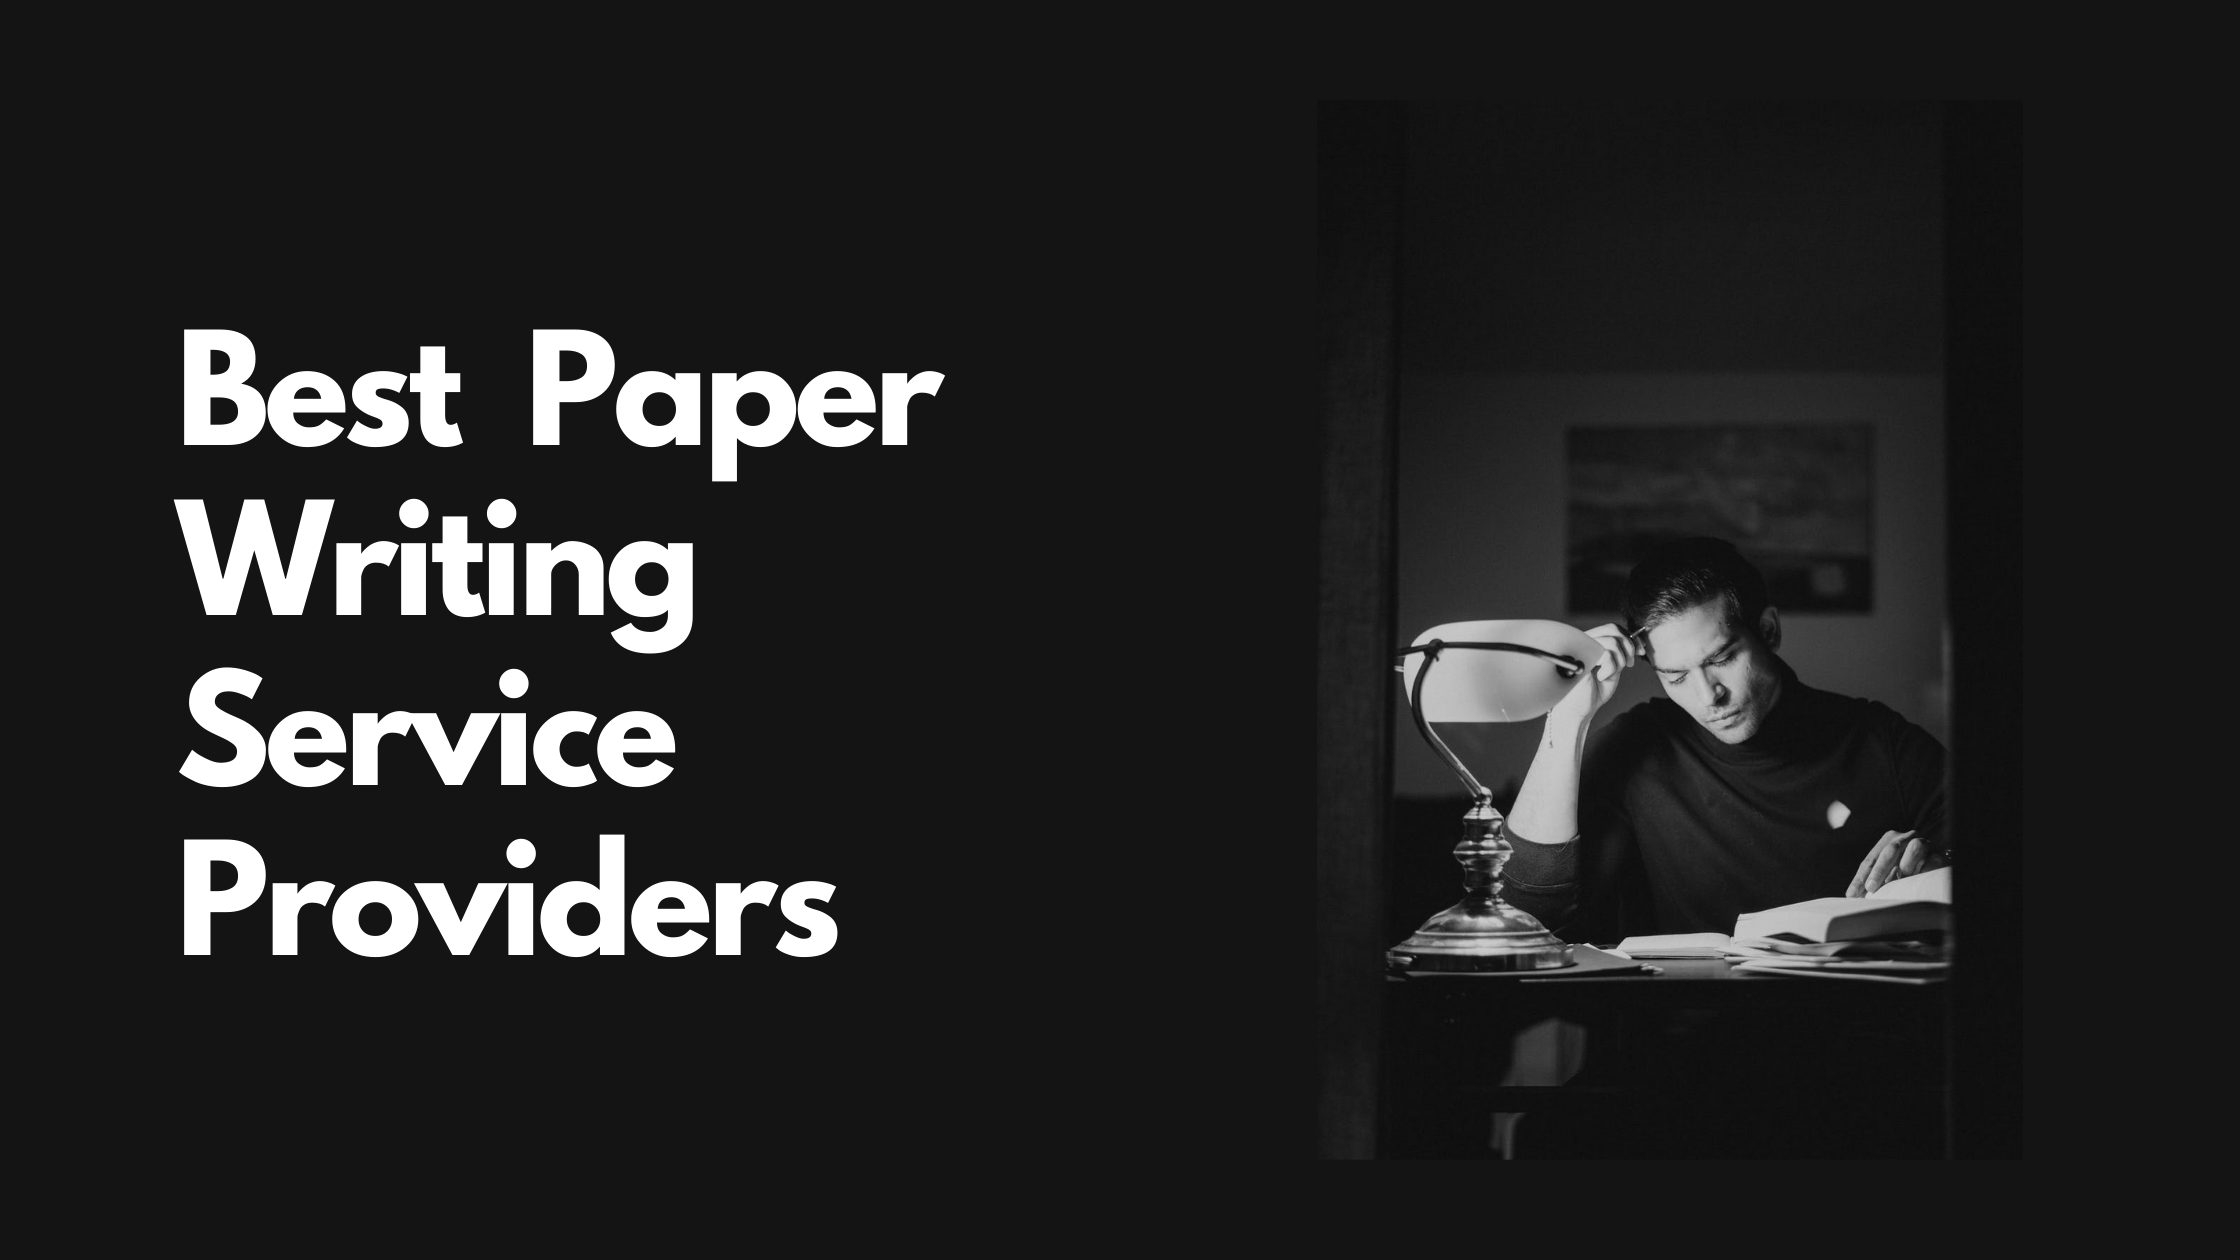 Best-Paper-Writing-Service-Providers.jpg